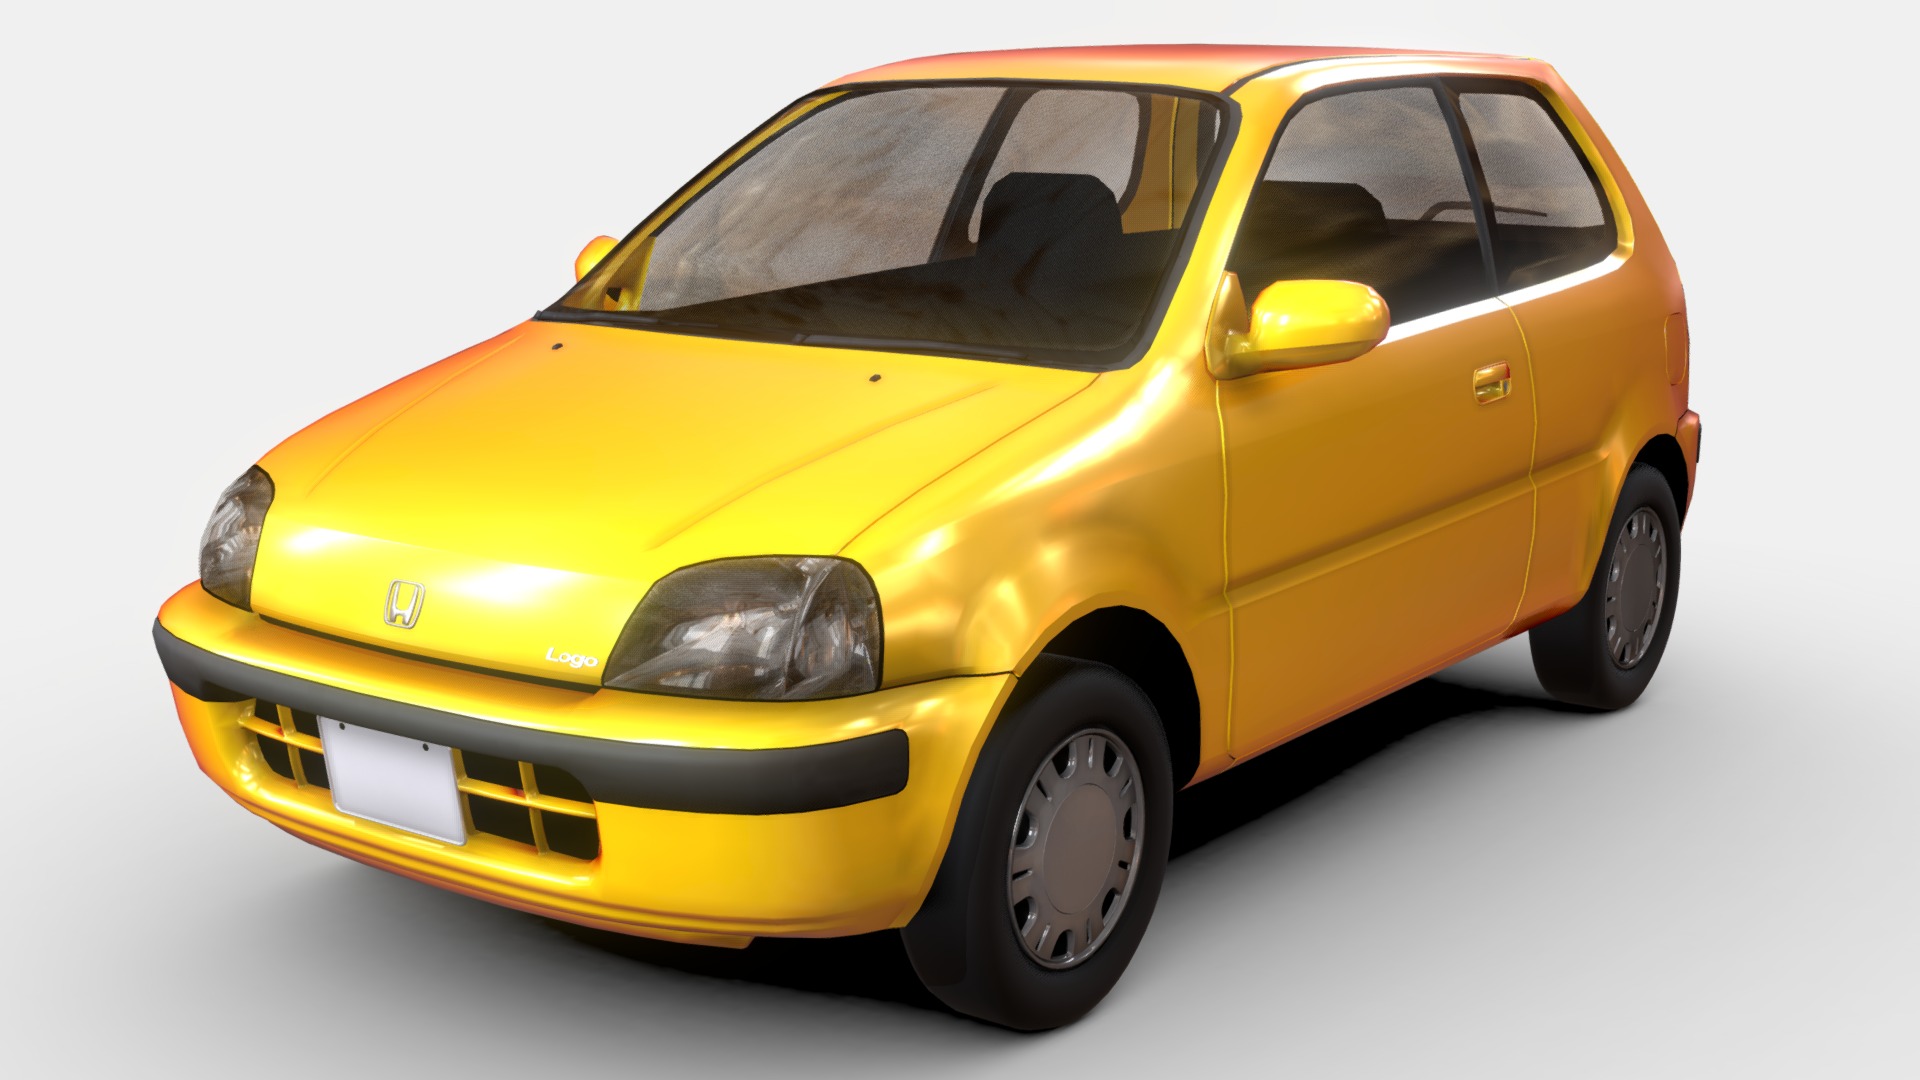 3D model Honda Logo - This is a 3D model of the Honda Logo. The 3D model is about a small yellow car.